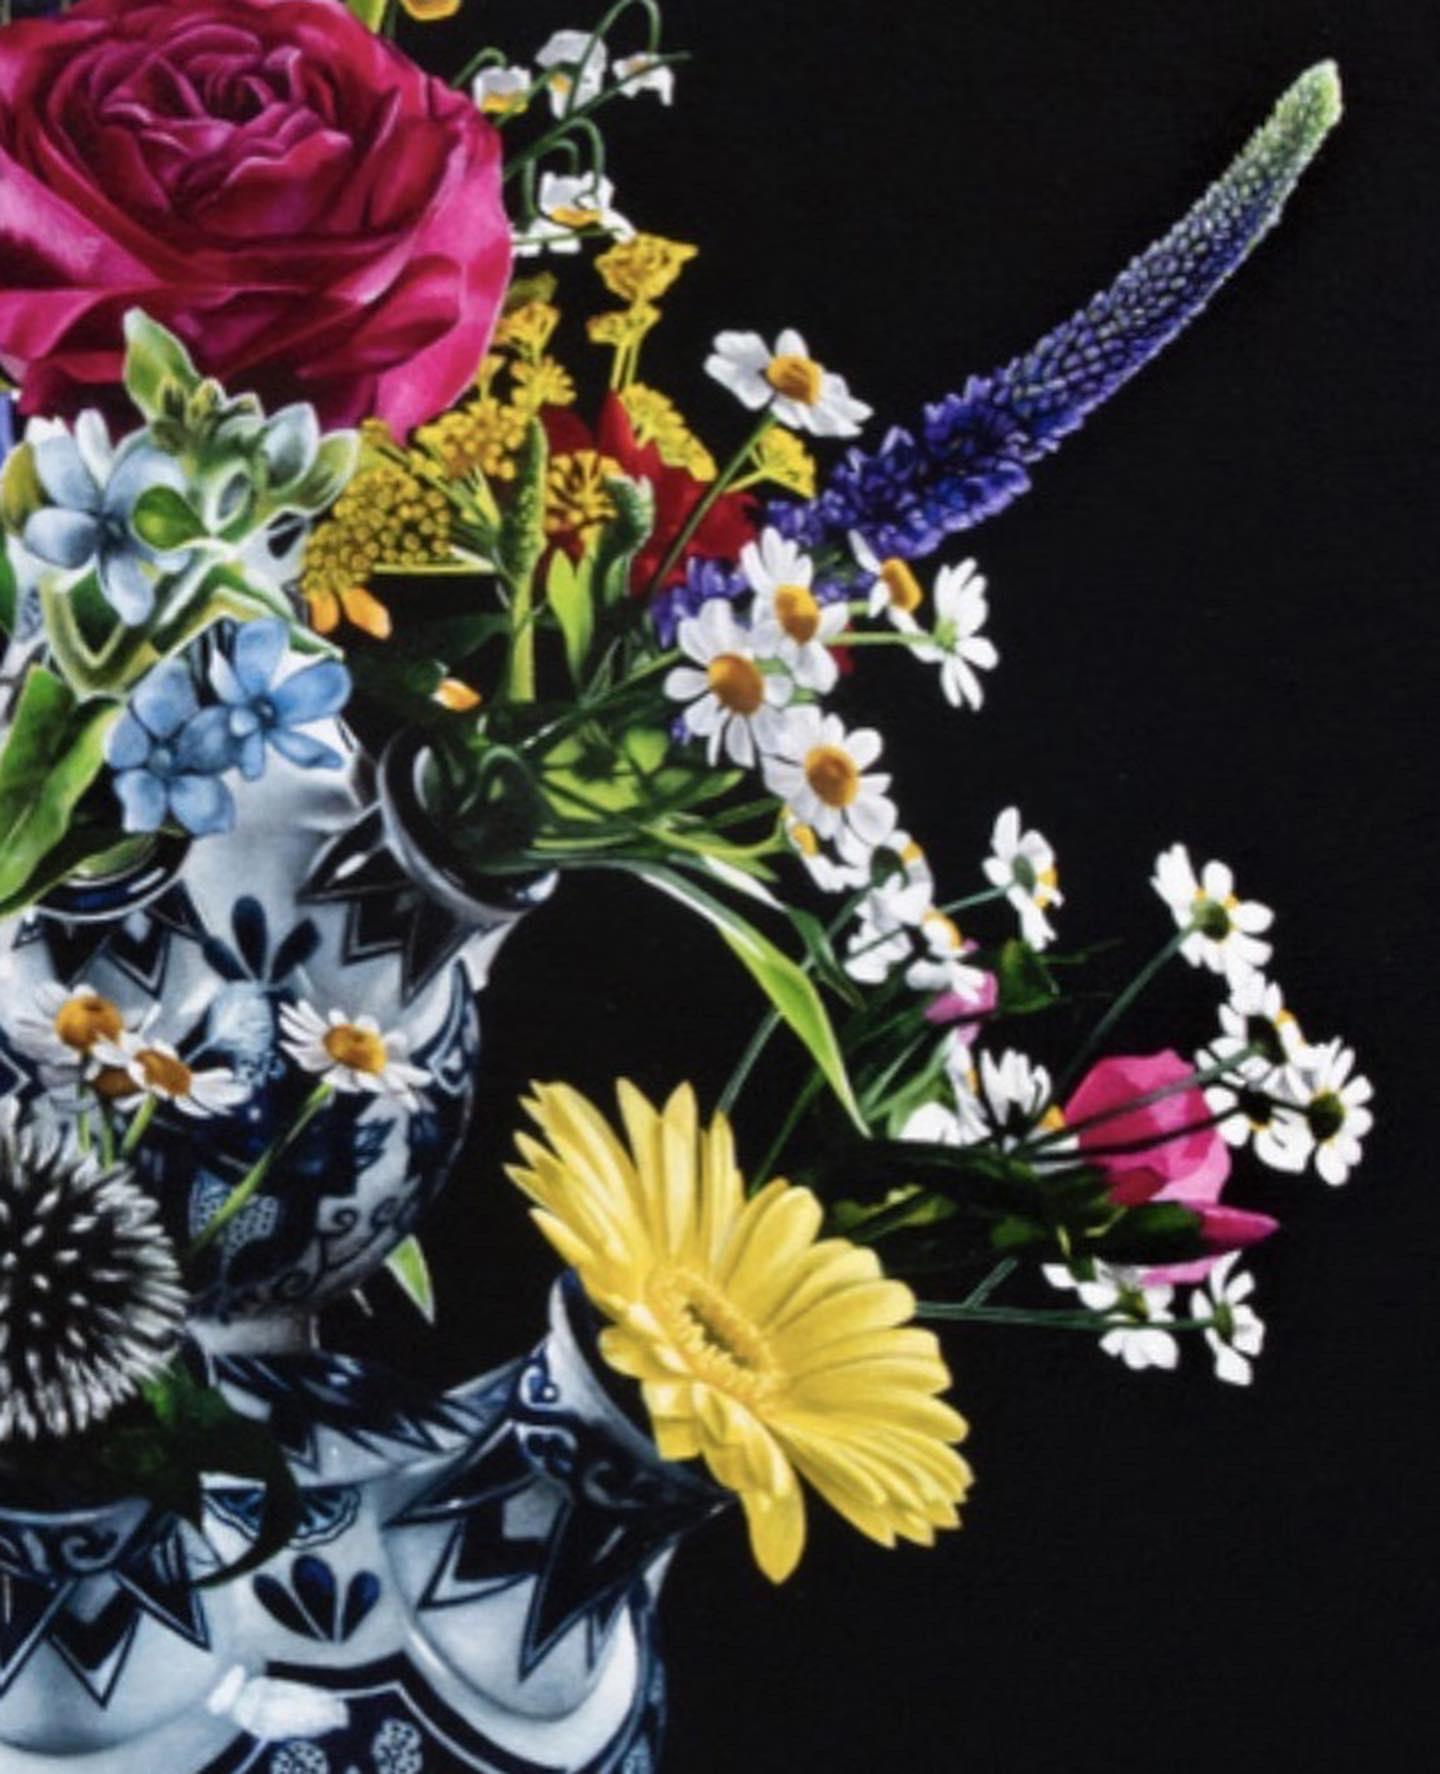 Flowers-21st Century Contemporary Flower Painting of a Tulip vase with Flowers - Black Still-Life Painting by Joran van der Haar